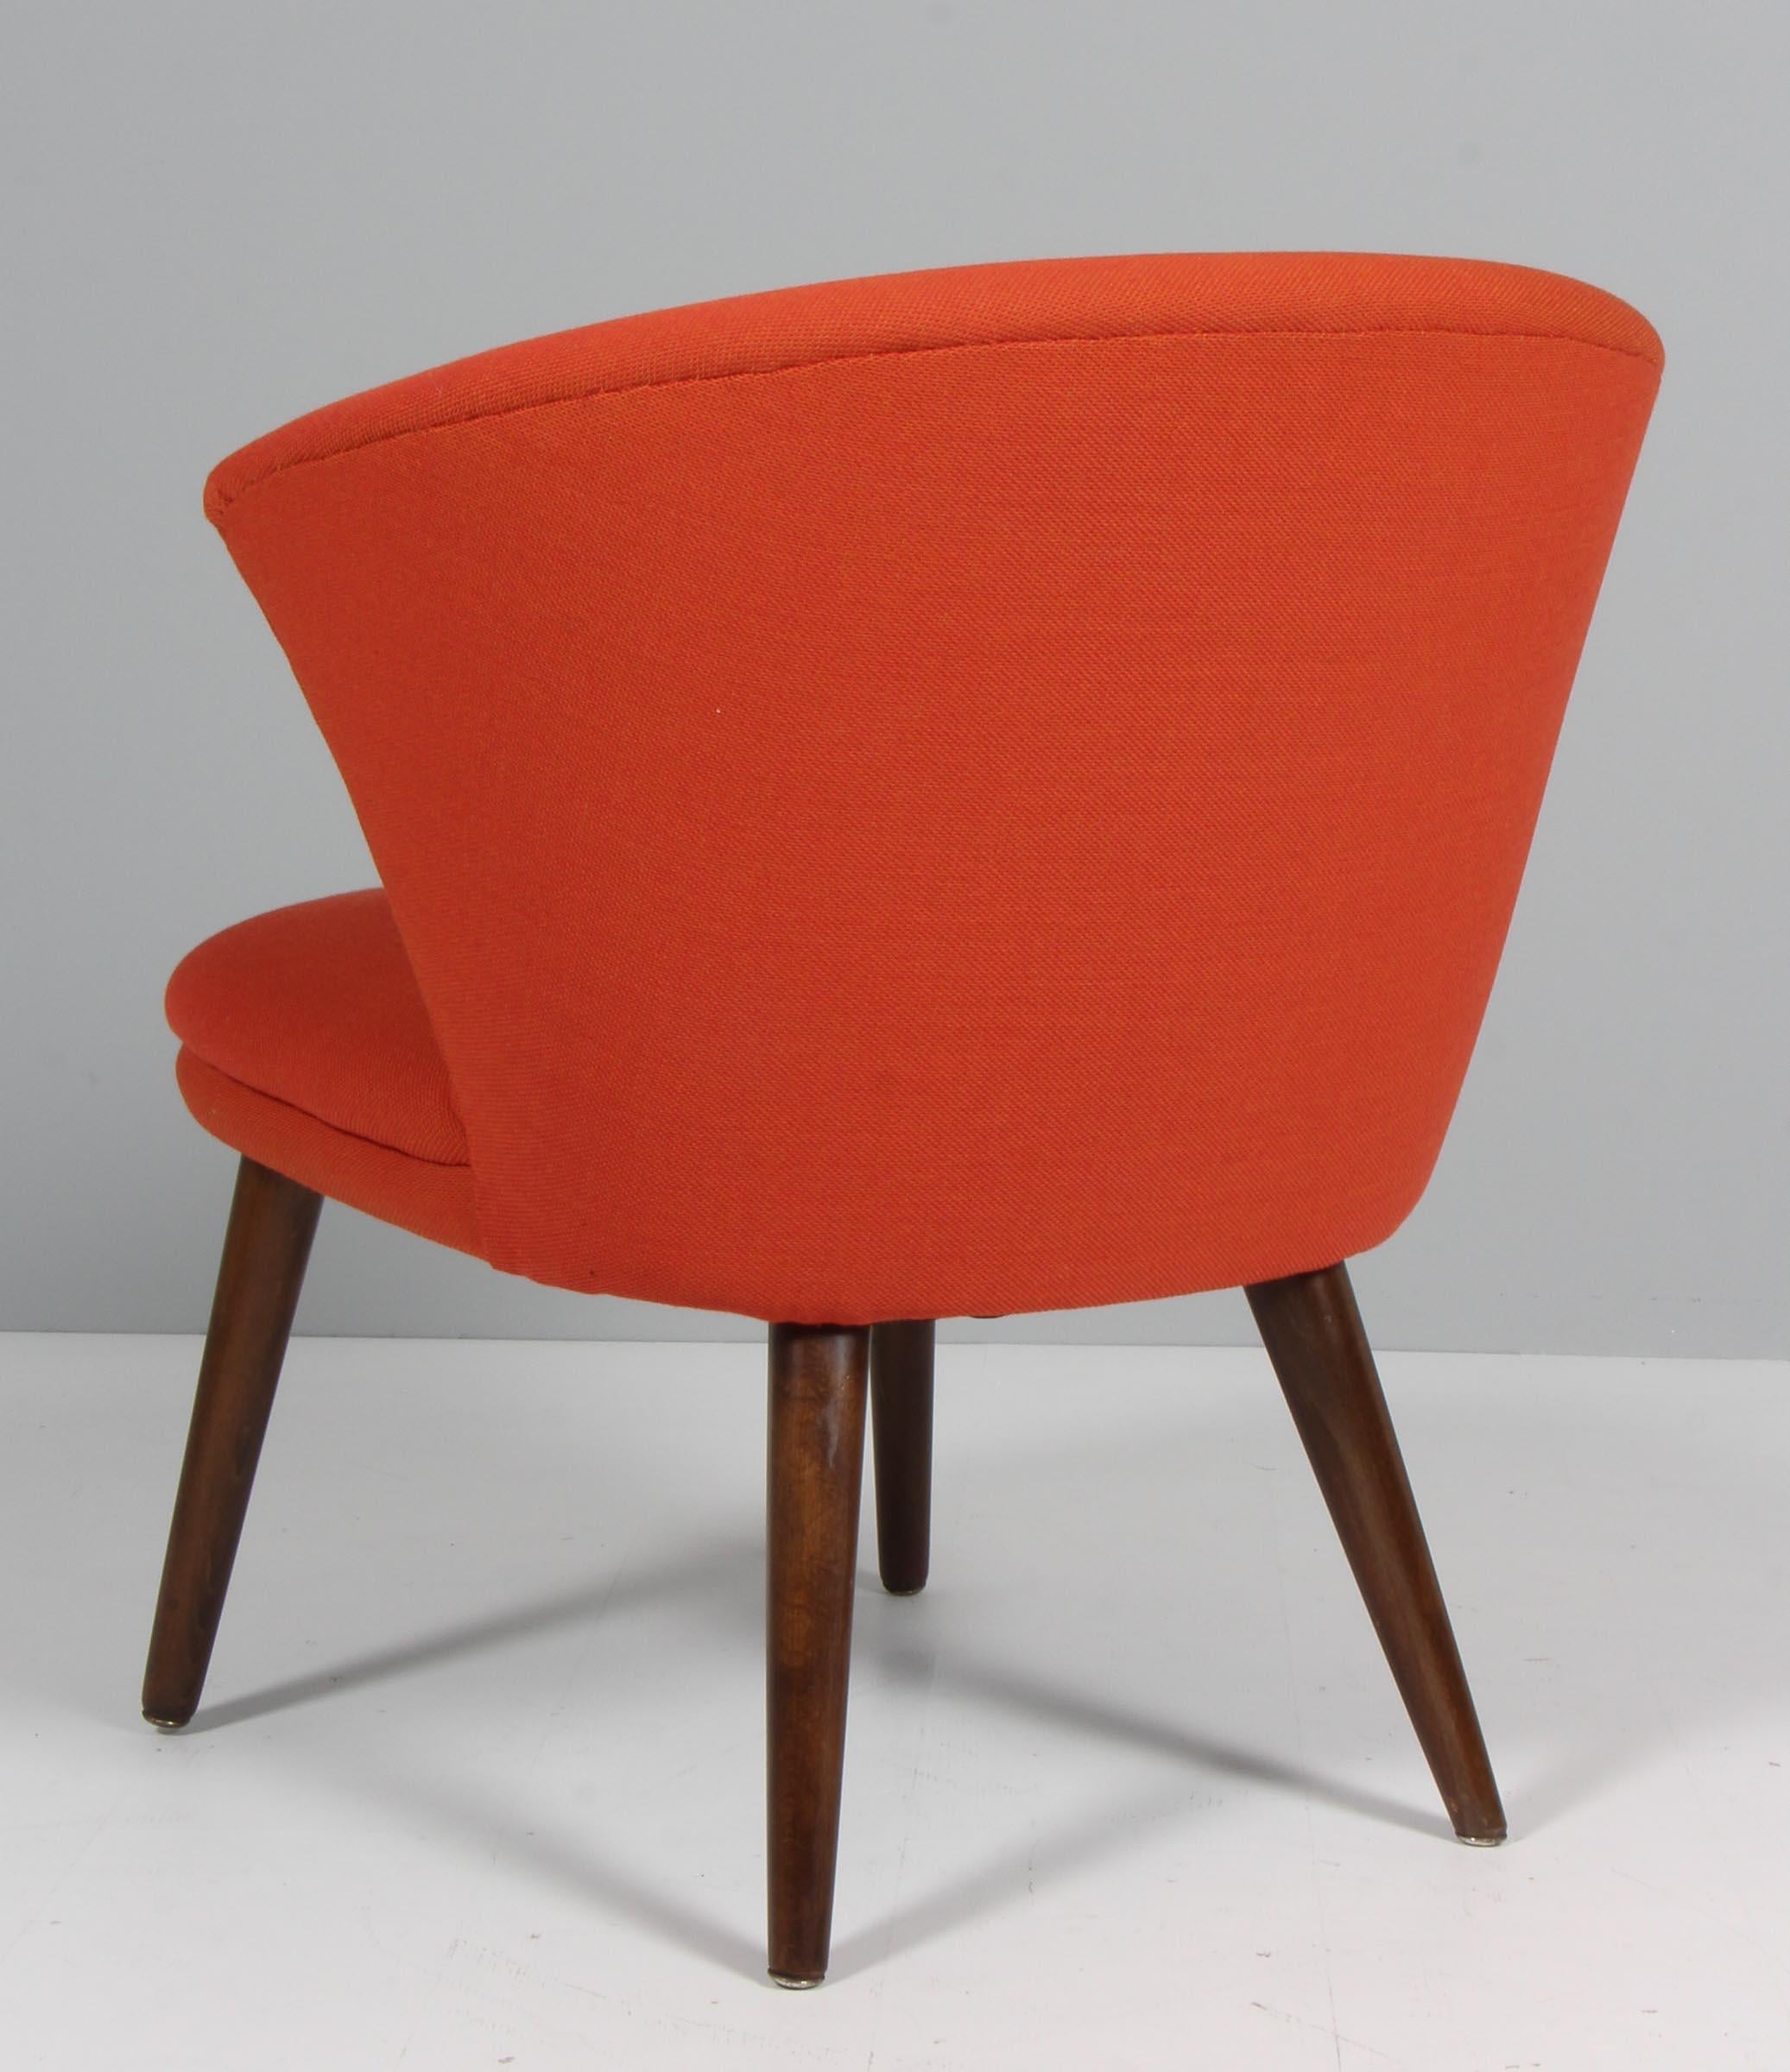 Beech Danish Midcentury Lounge Chair, Designed by Bent Møller Jepsen, circa 1960s